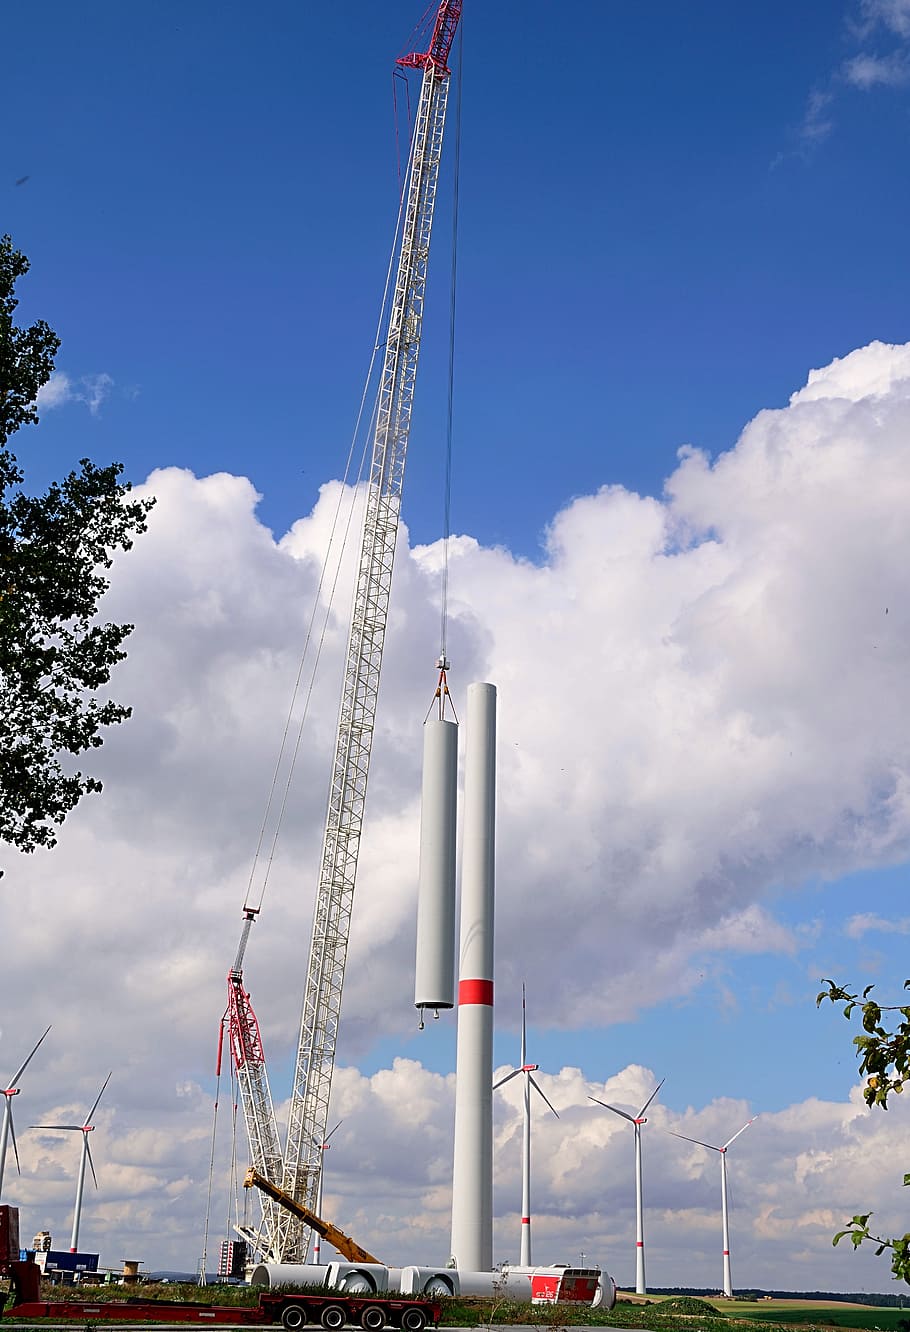 windräder, pinwheel, site, eco electricity, wind power, wind turbine, sky, industry, cloud - sky, machinery